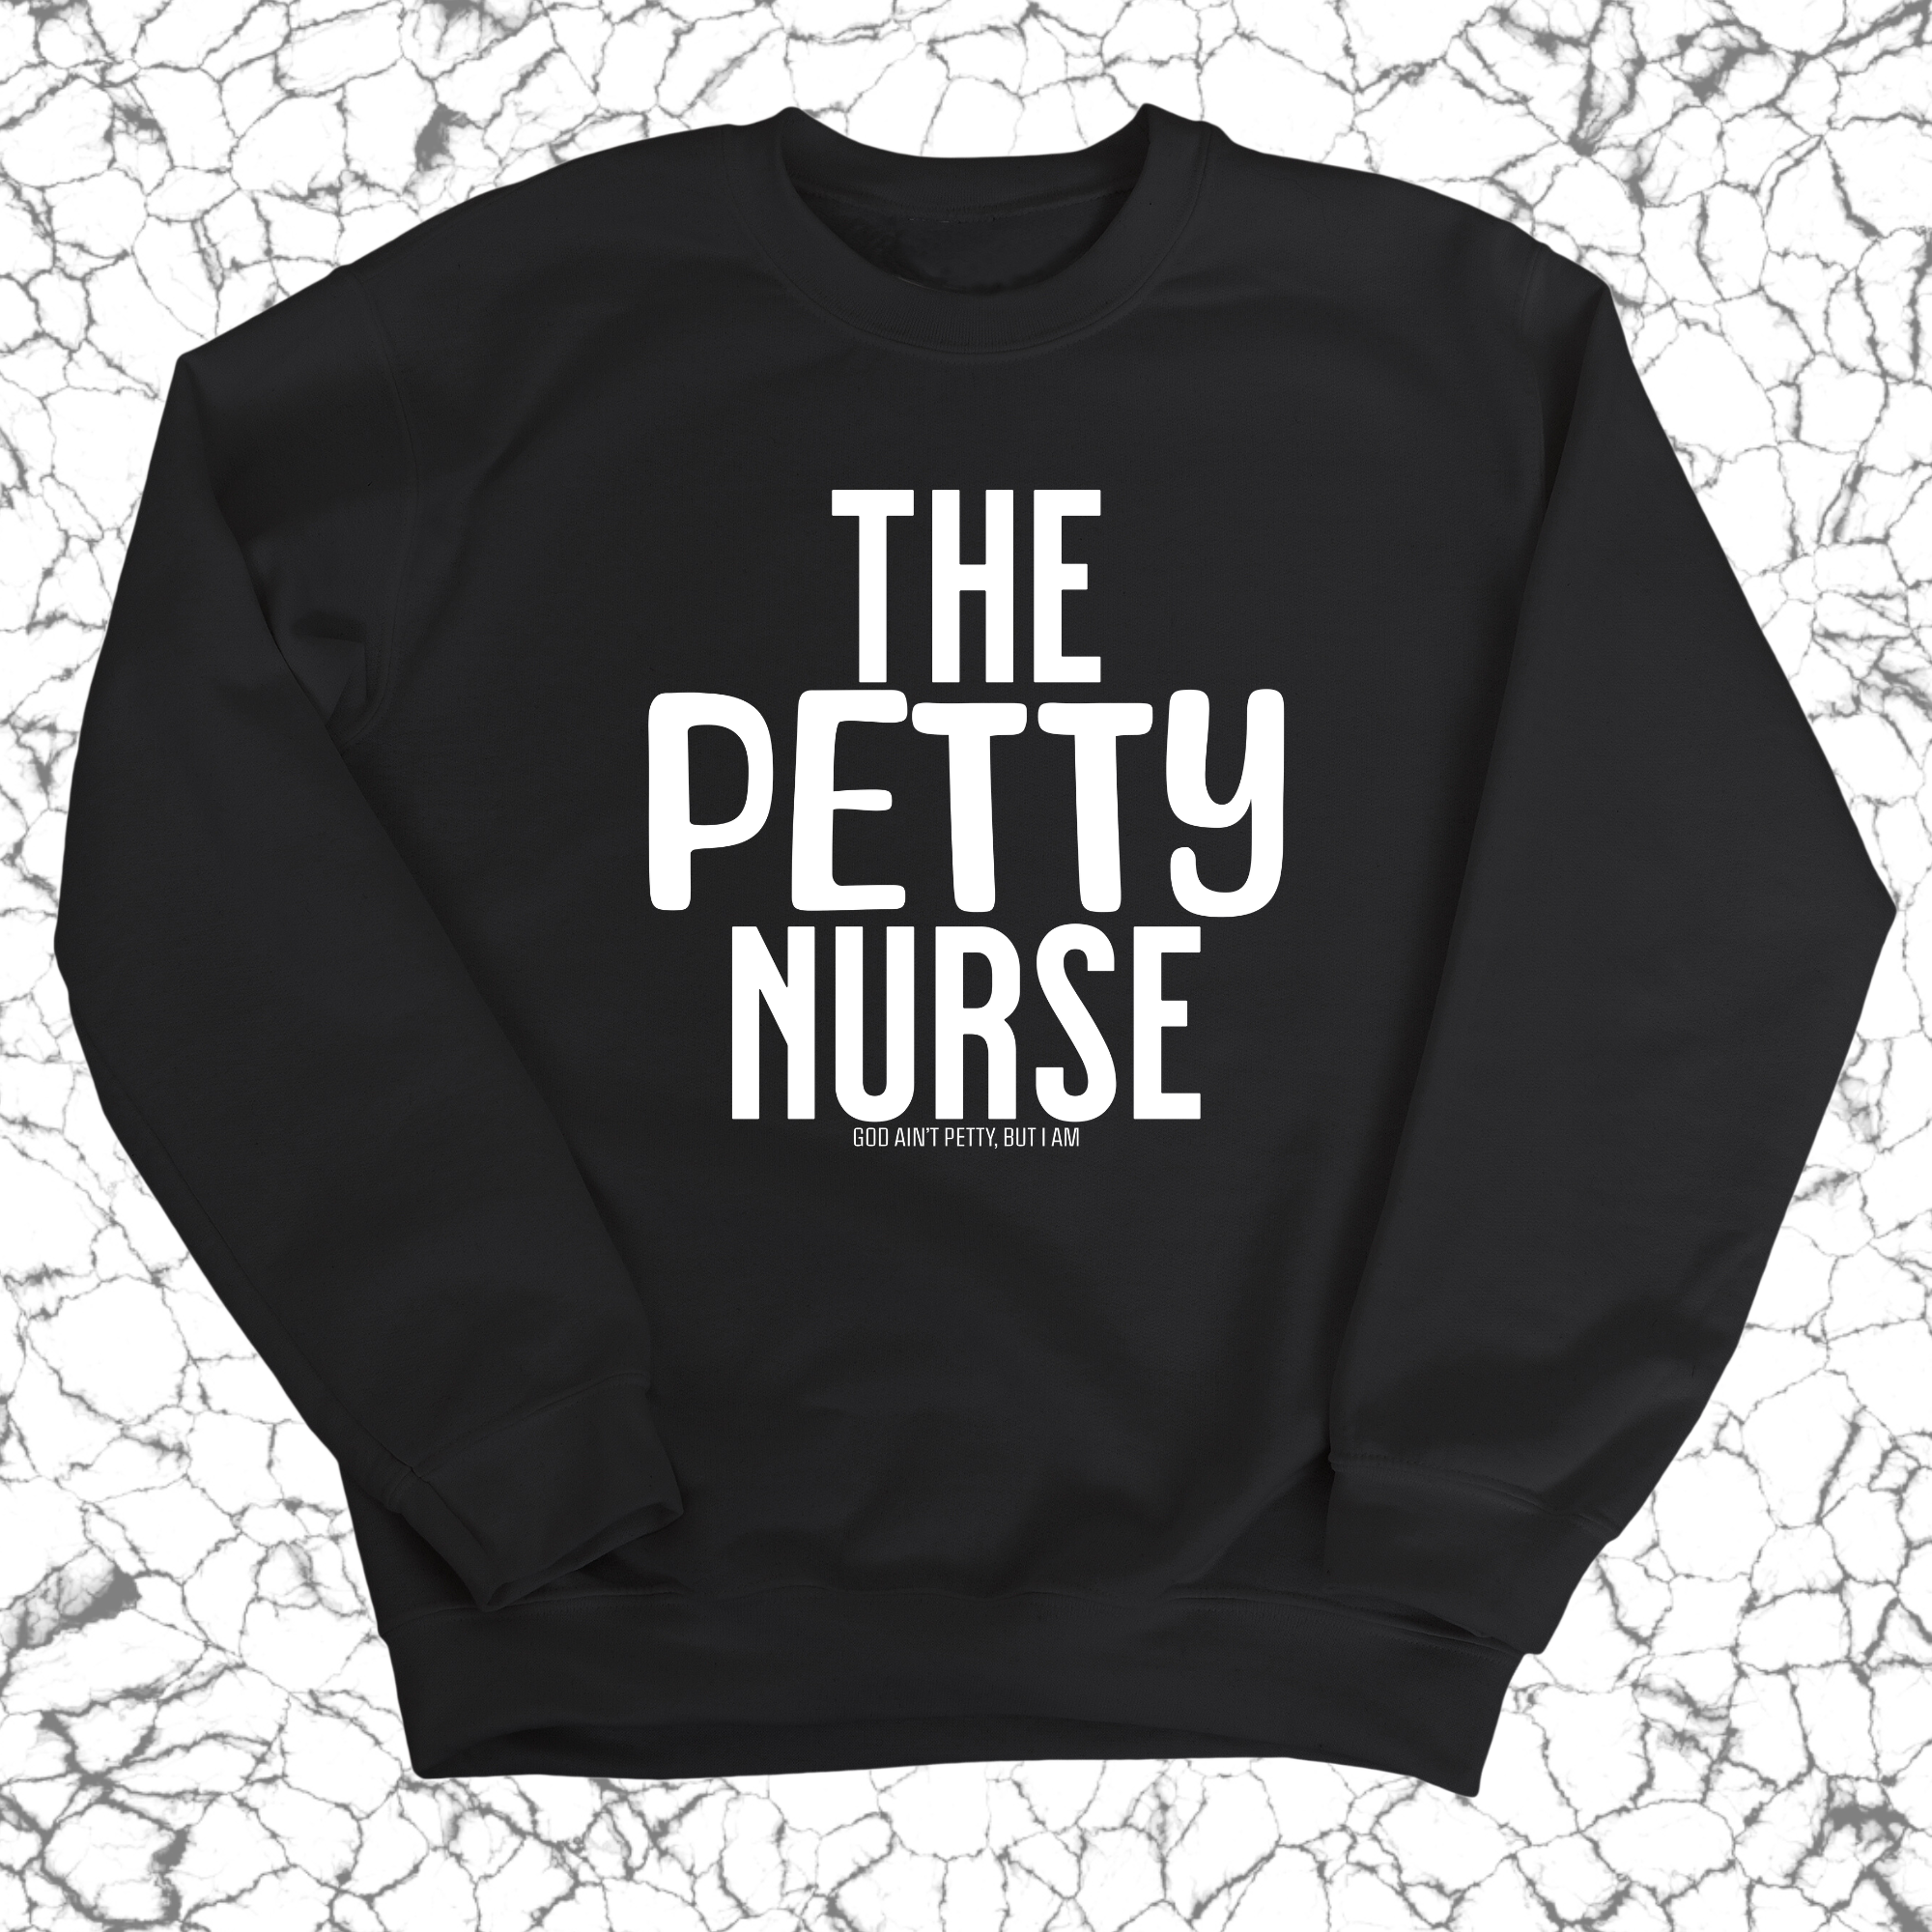 The Petty Nurse Unisex Sweatshirt-Sweatshirt-The Original God Ain't Petty But I Am